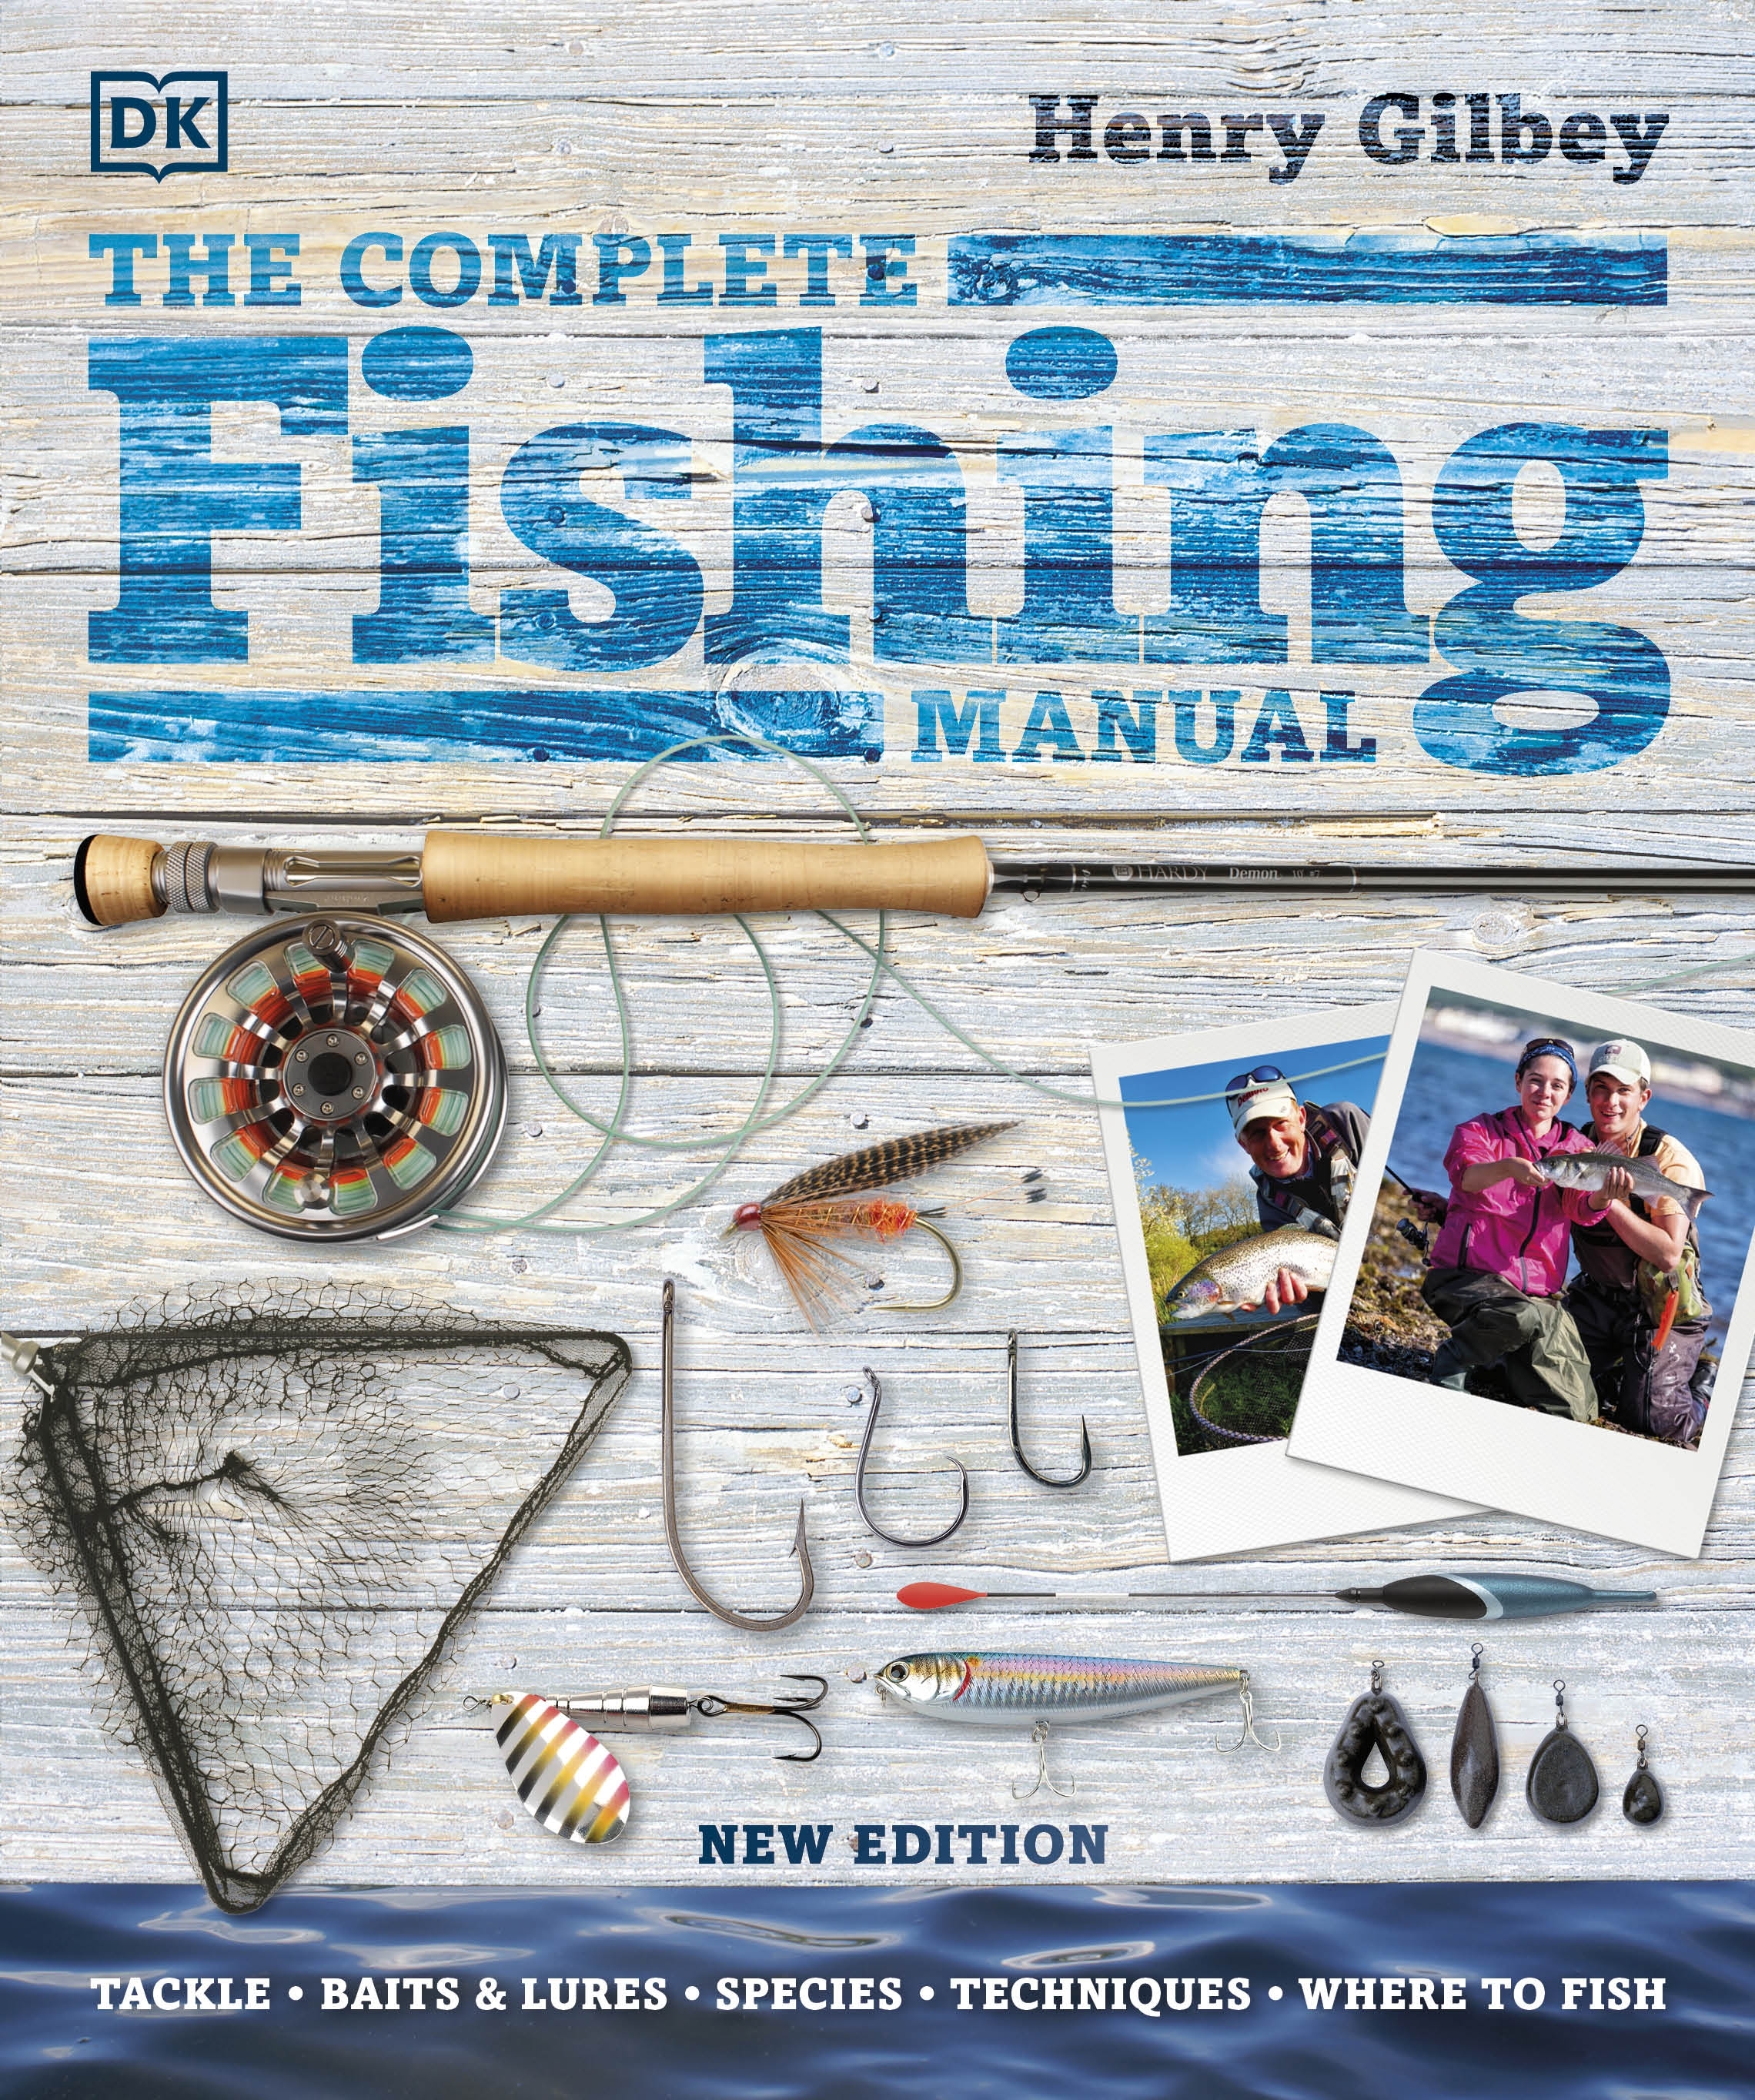 The Complete Fishing Manual - Penguin Books Australia